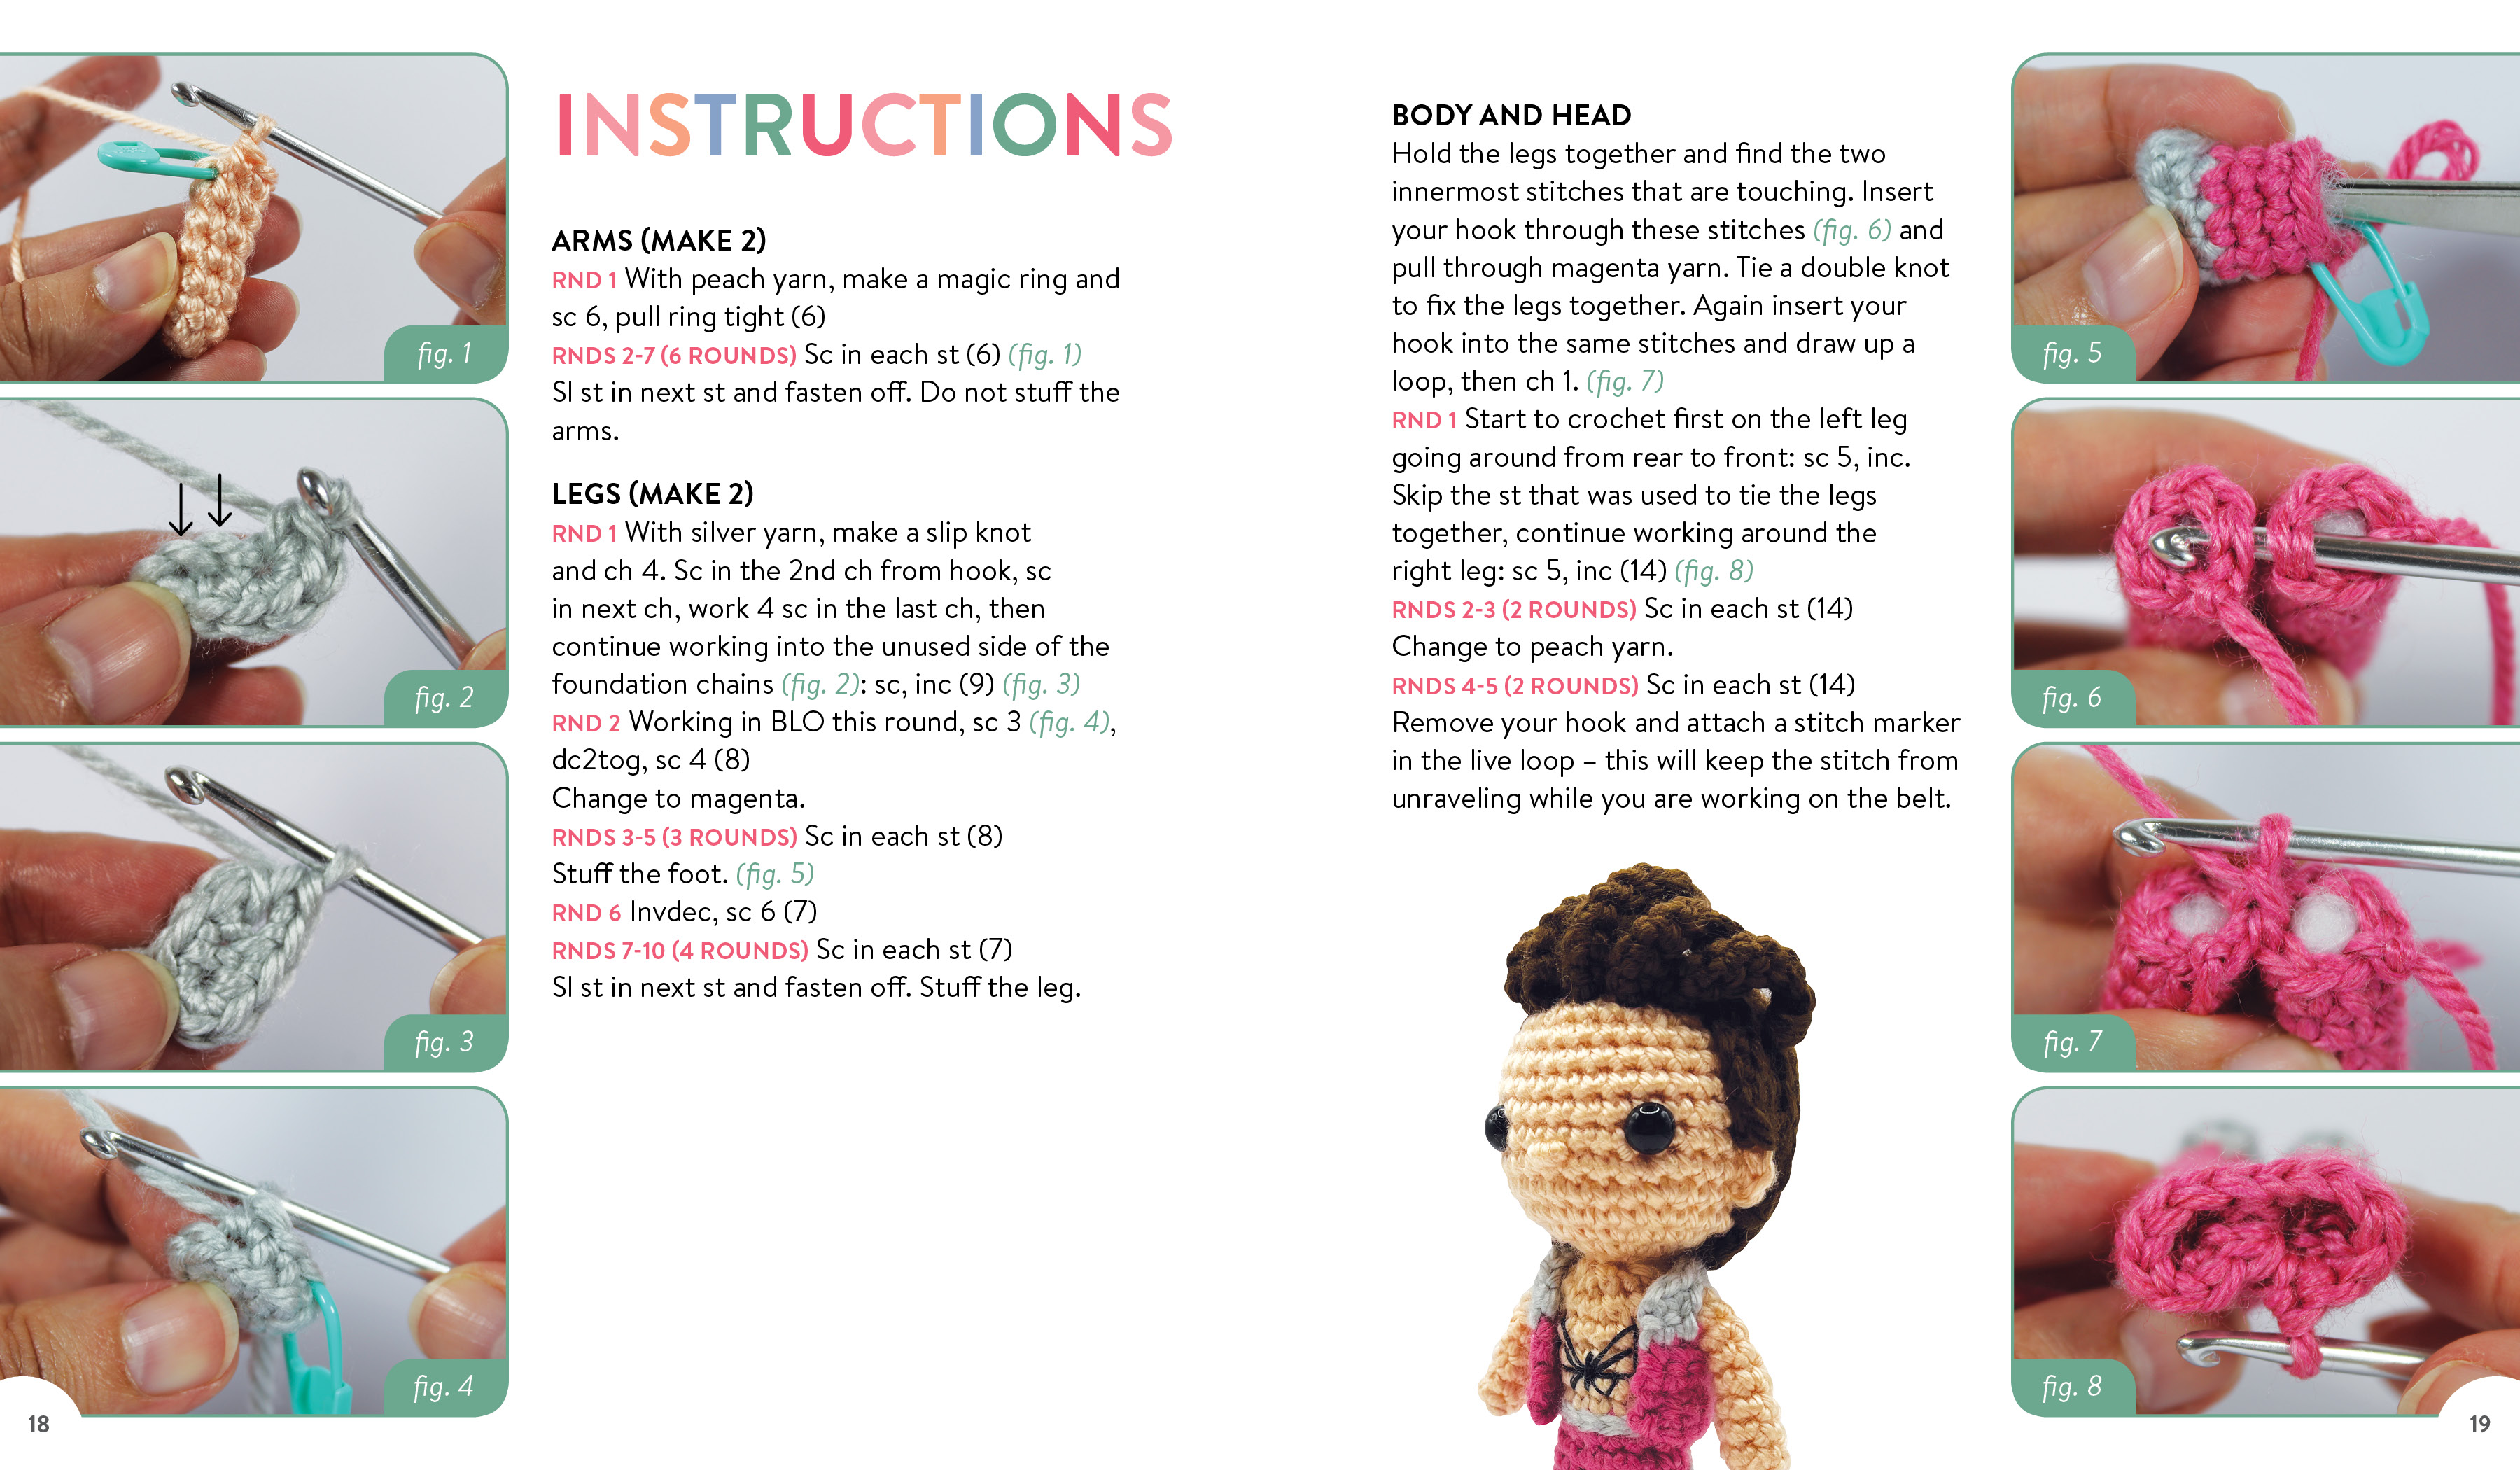 Unofficial Harry Styles Crochet